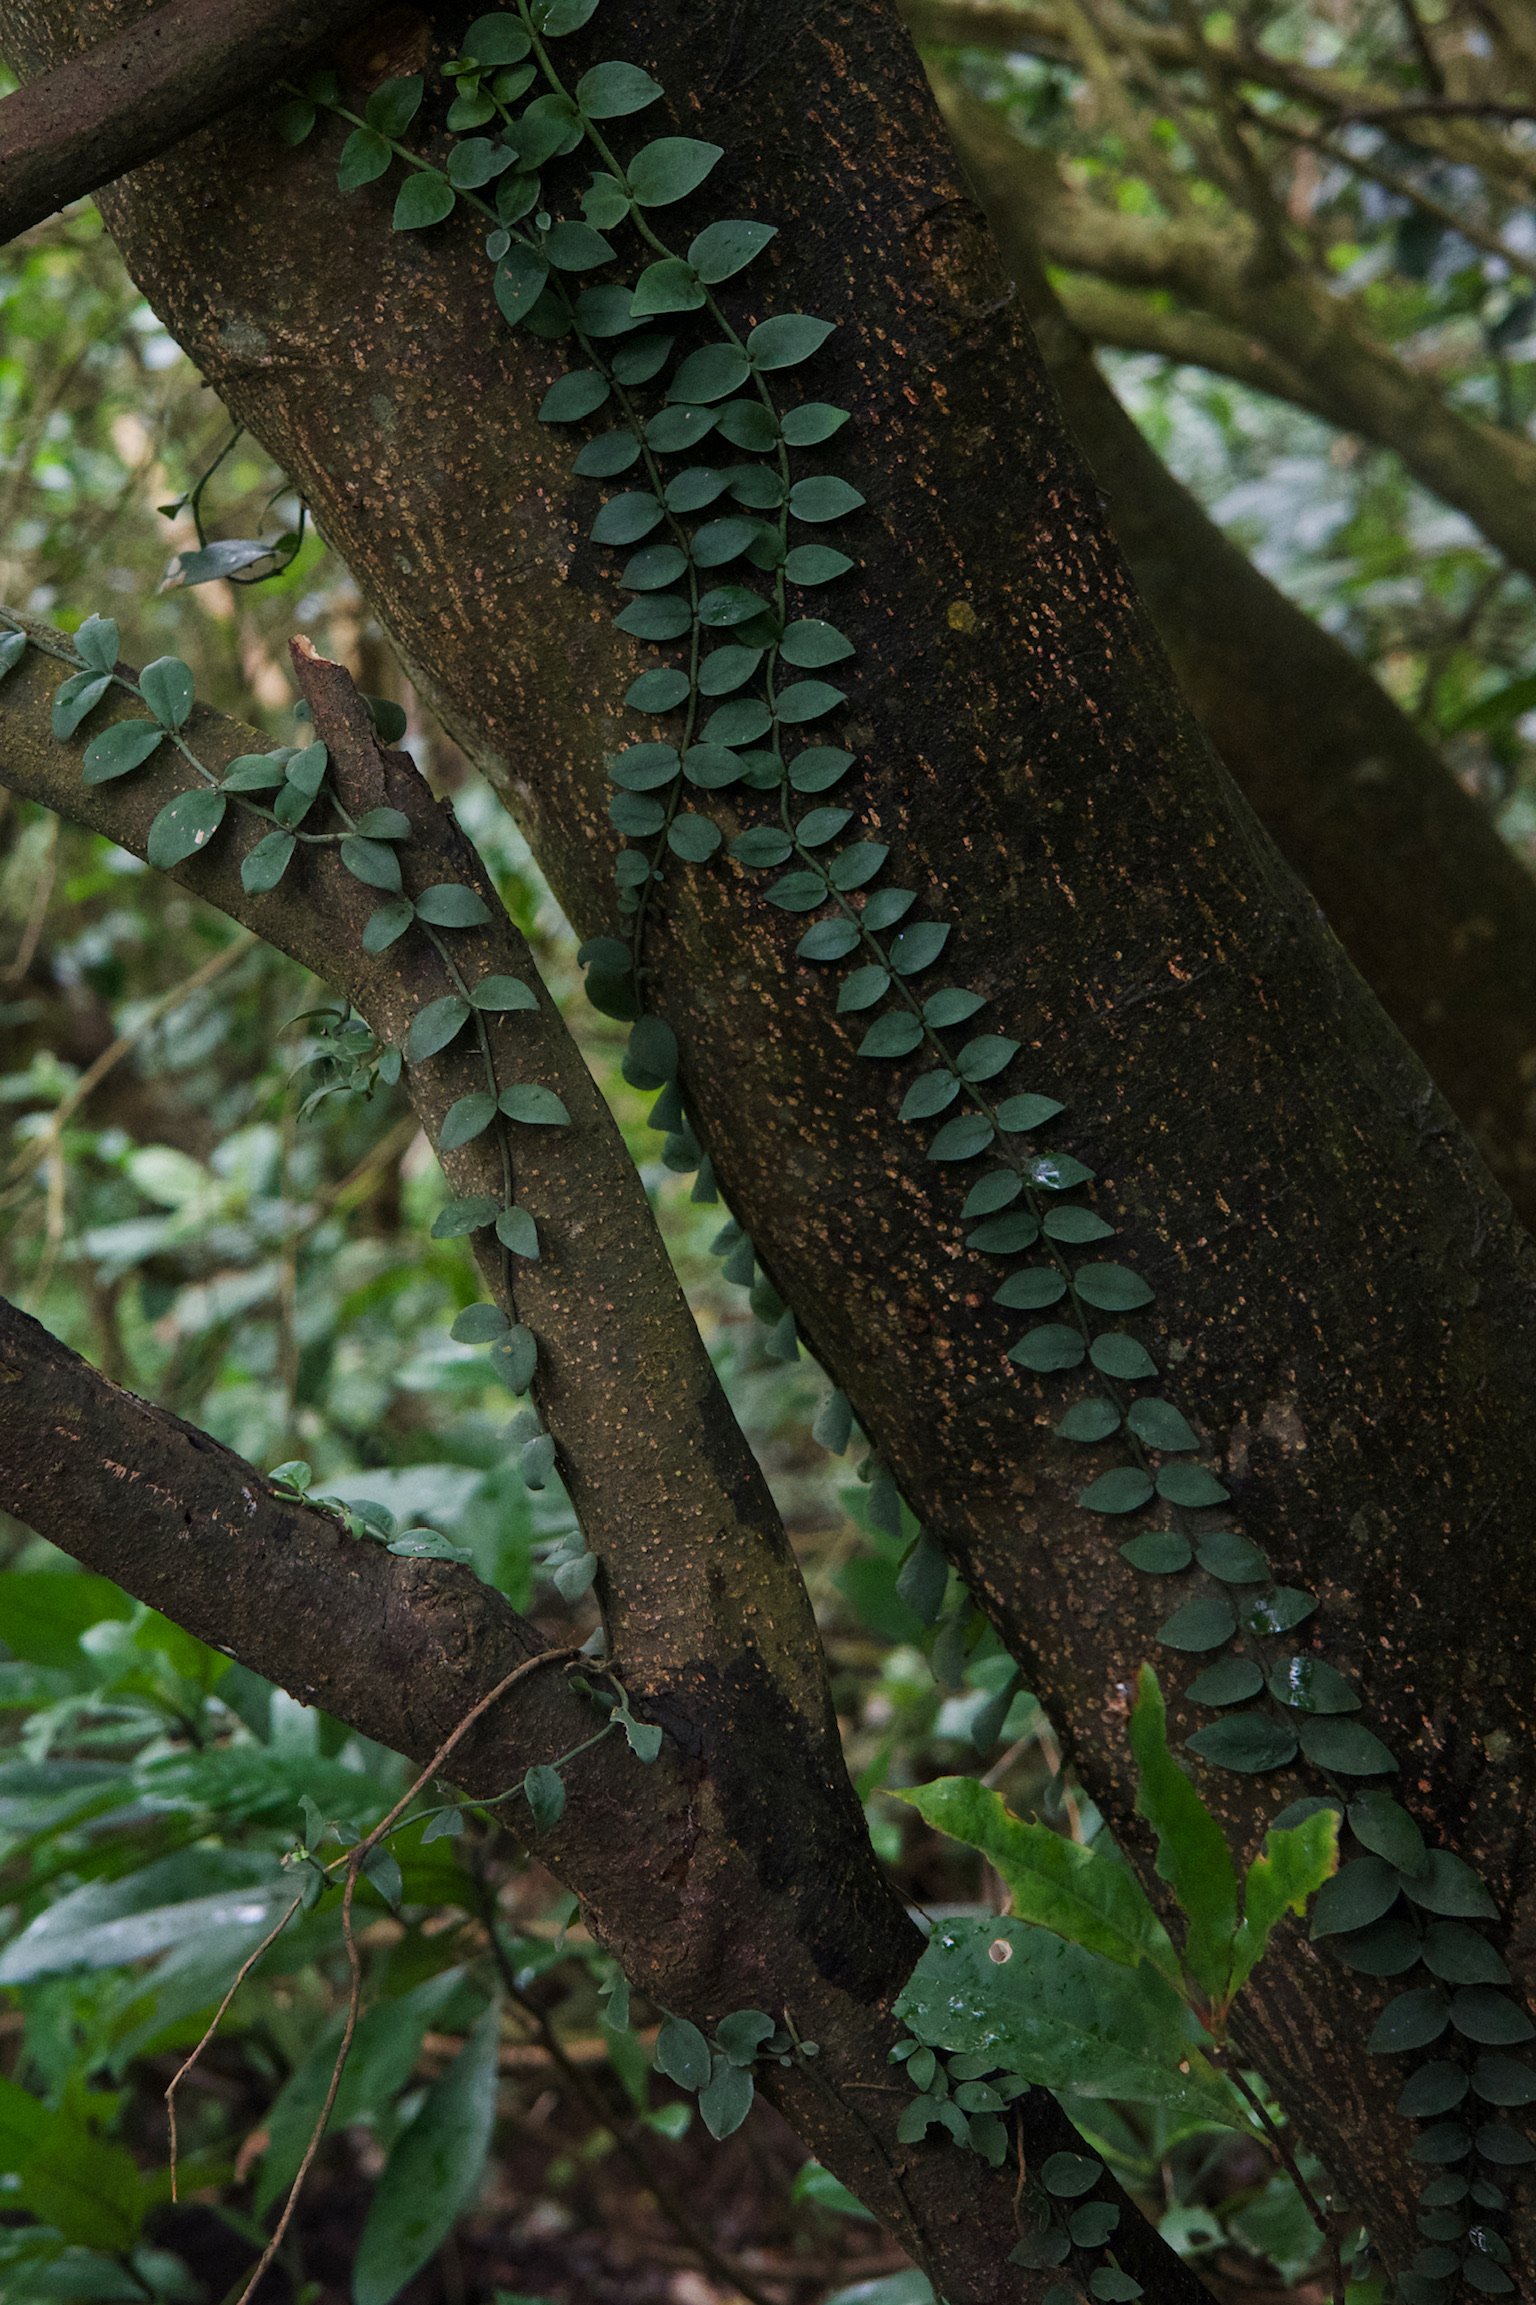 Rhapidophora hayi, dark green leafy plants that climbs trees.